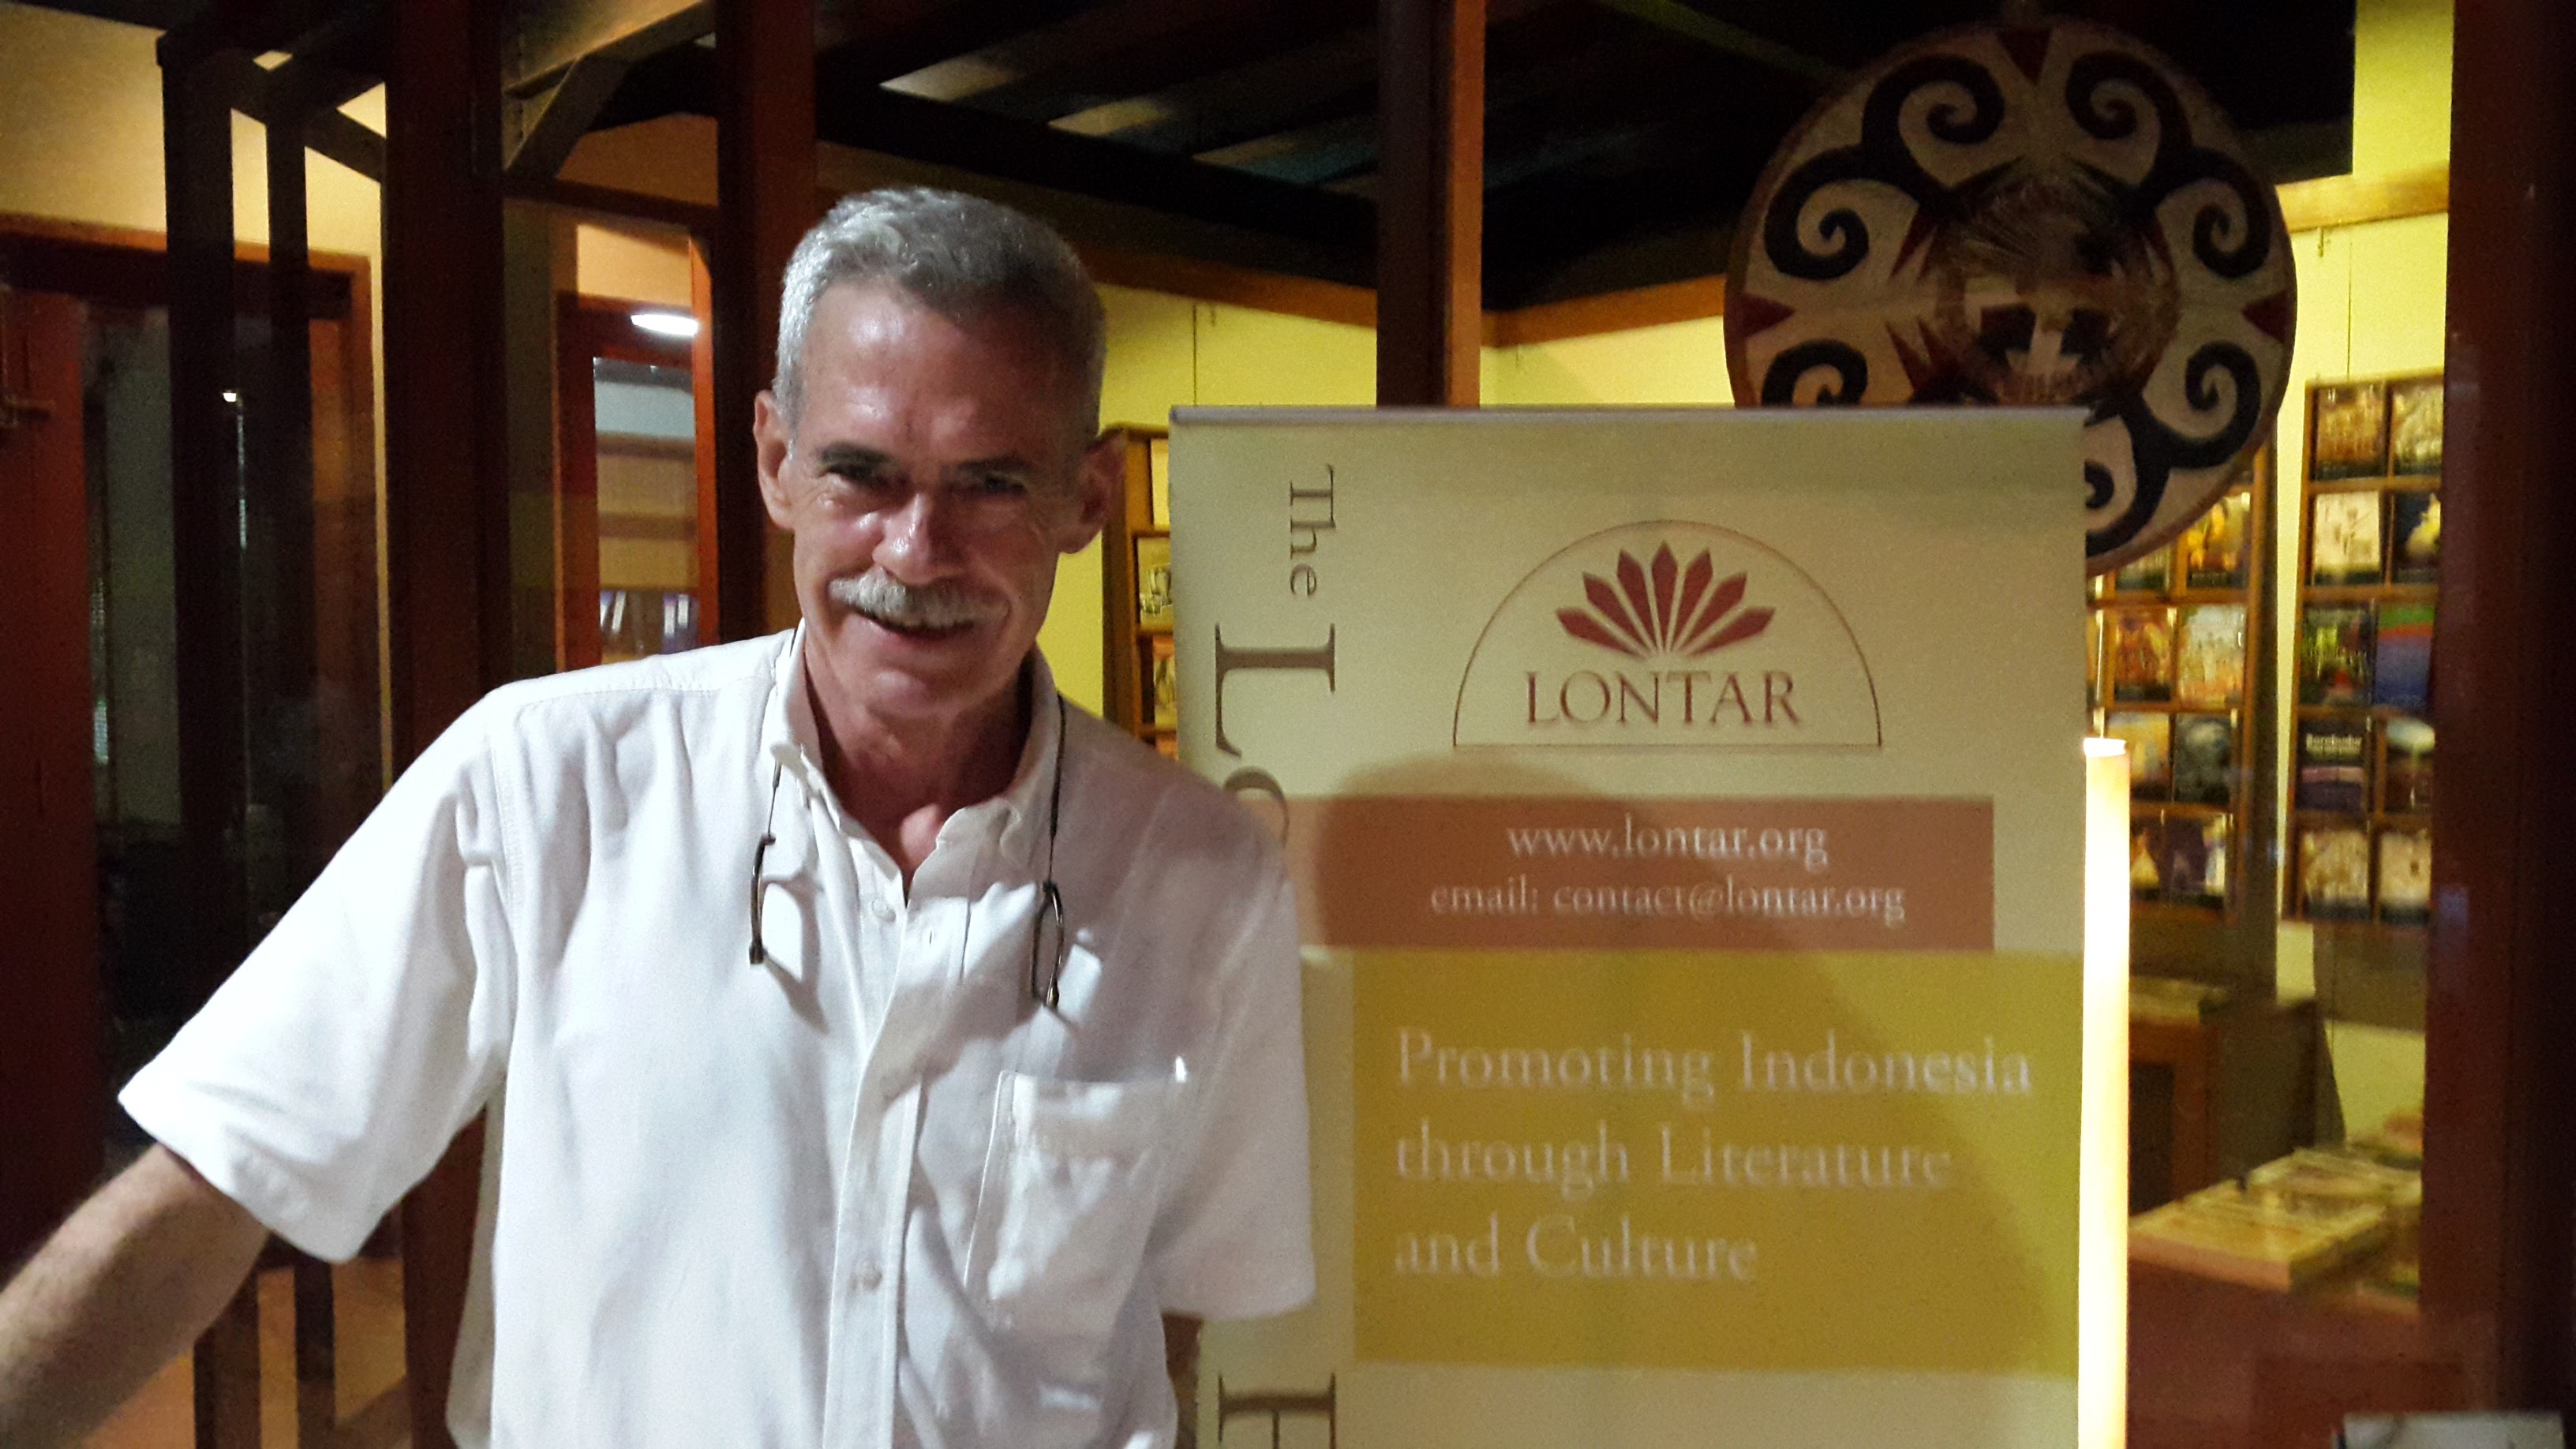 John Mcglynn at Lontar Foundation